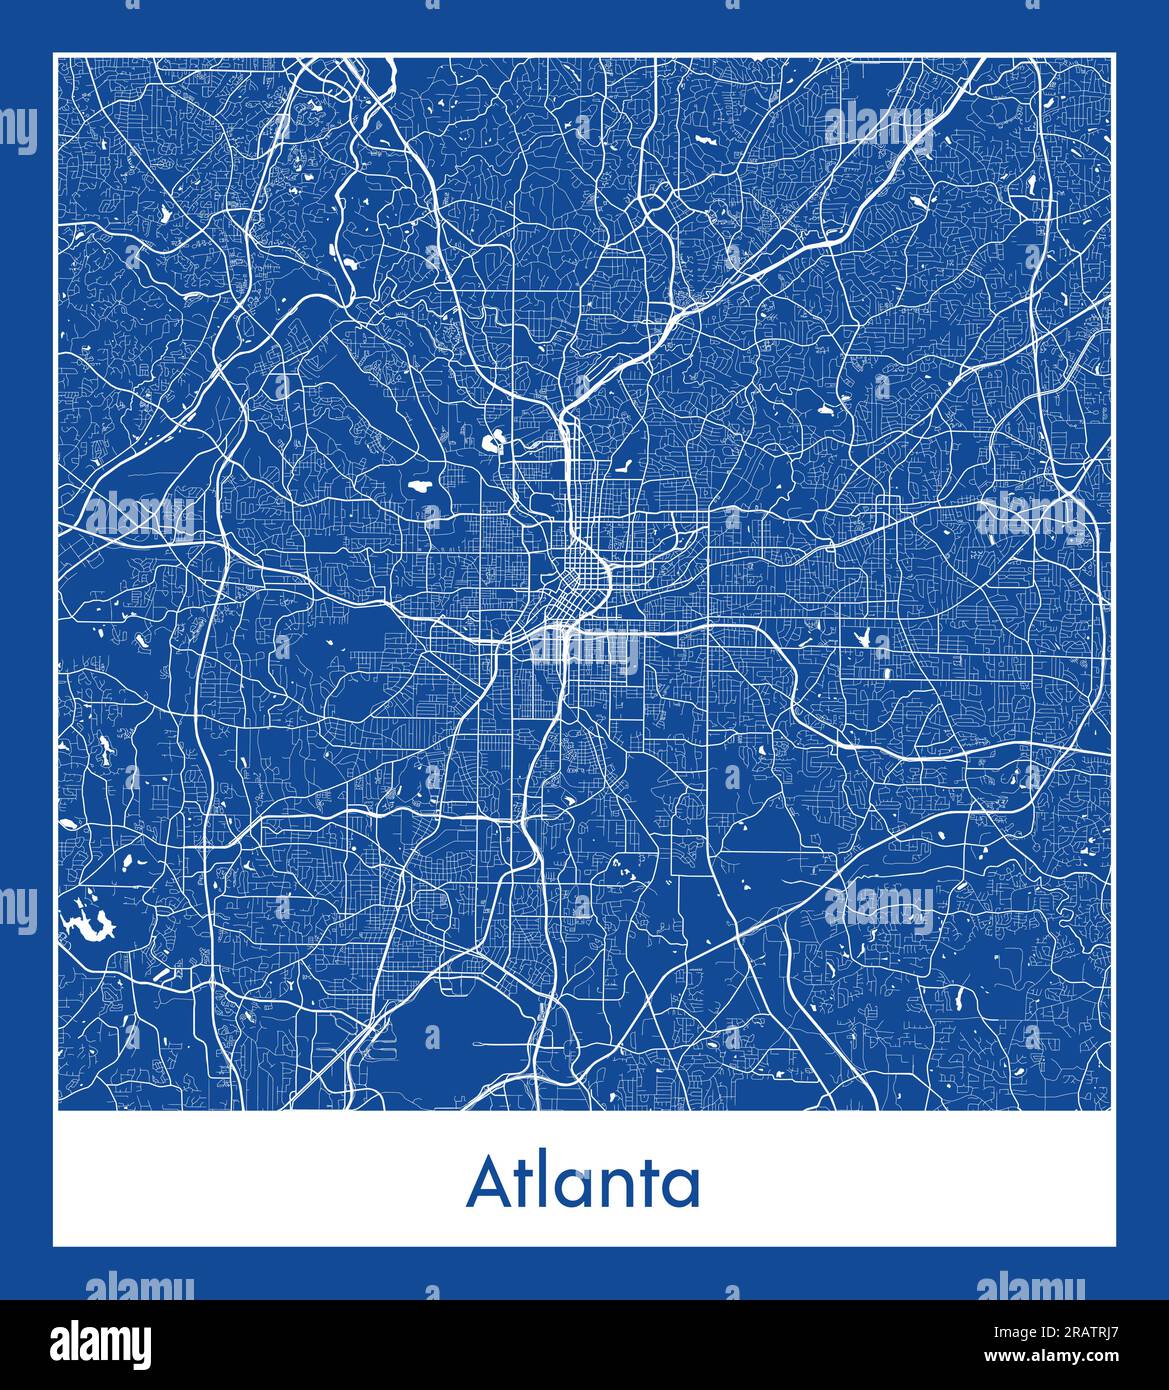 Atlanta United States North America City Karte blau gedruckt Vektordarstellung Stock Vektor